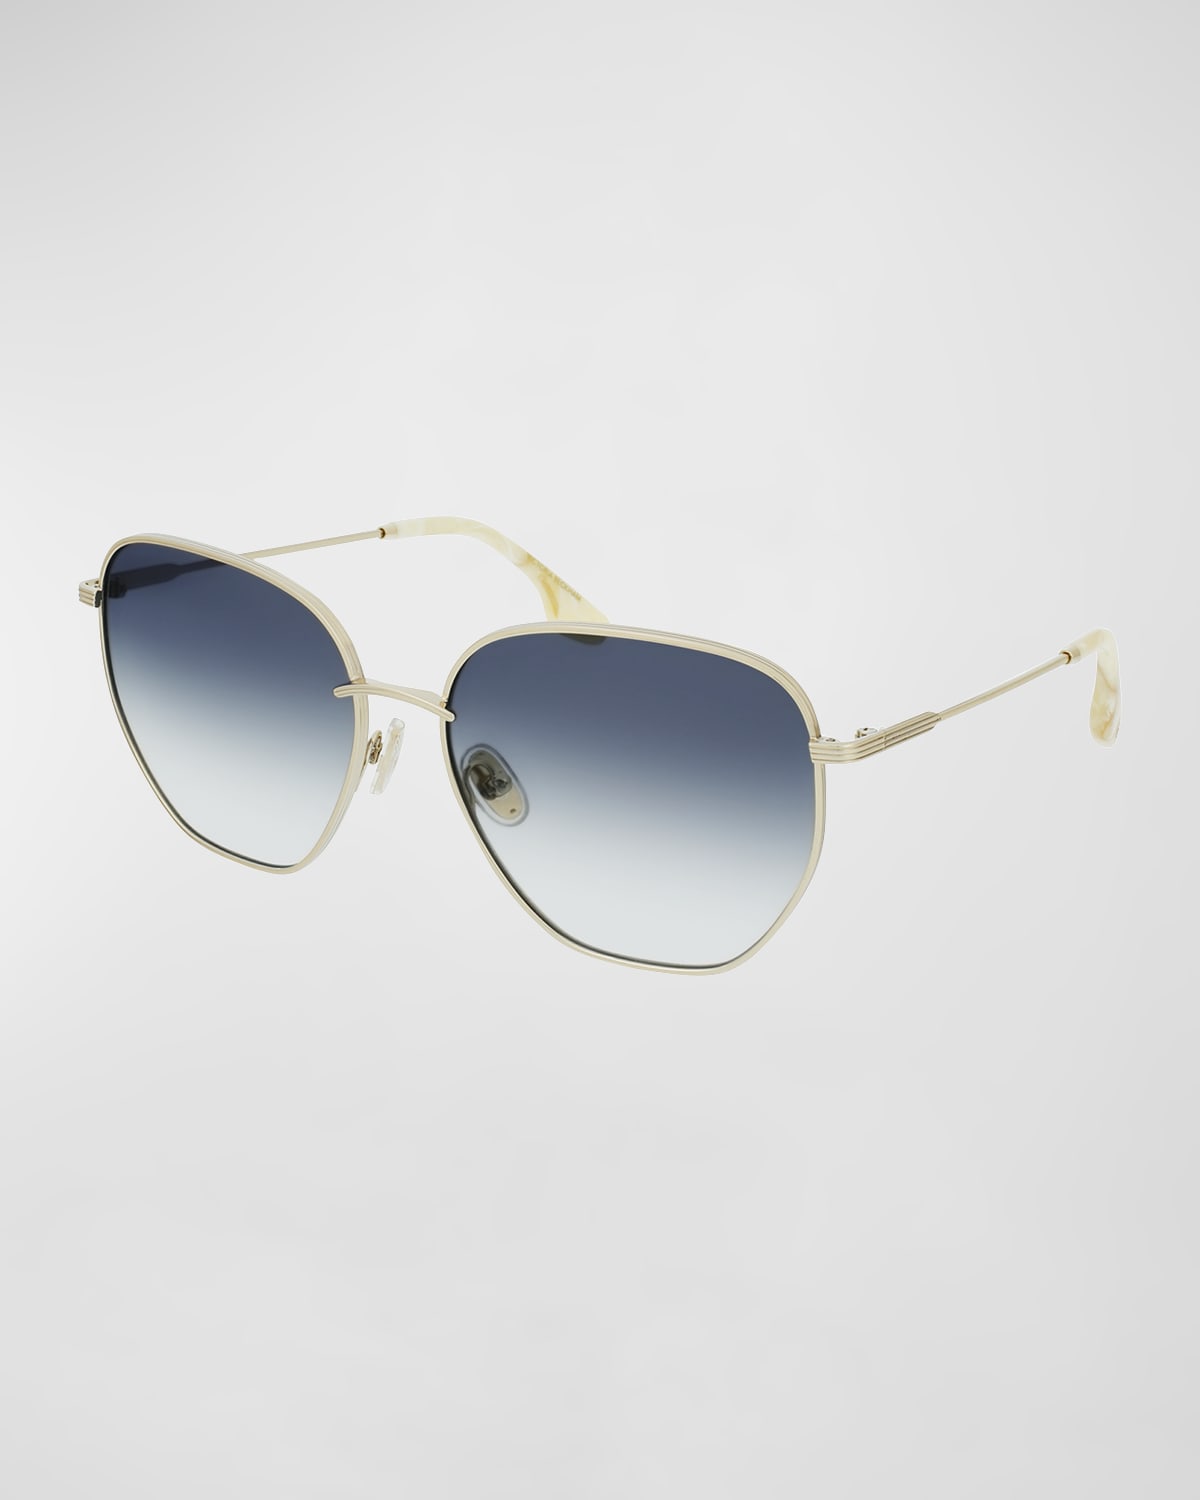 Victoria Beckham Geometric Square Metal Sunglasses In Blue / Gold